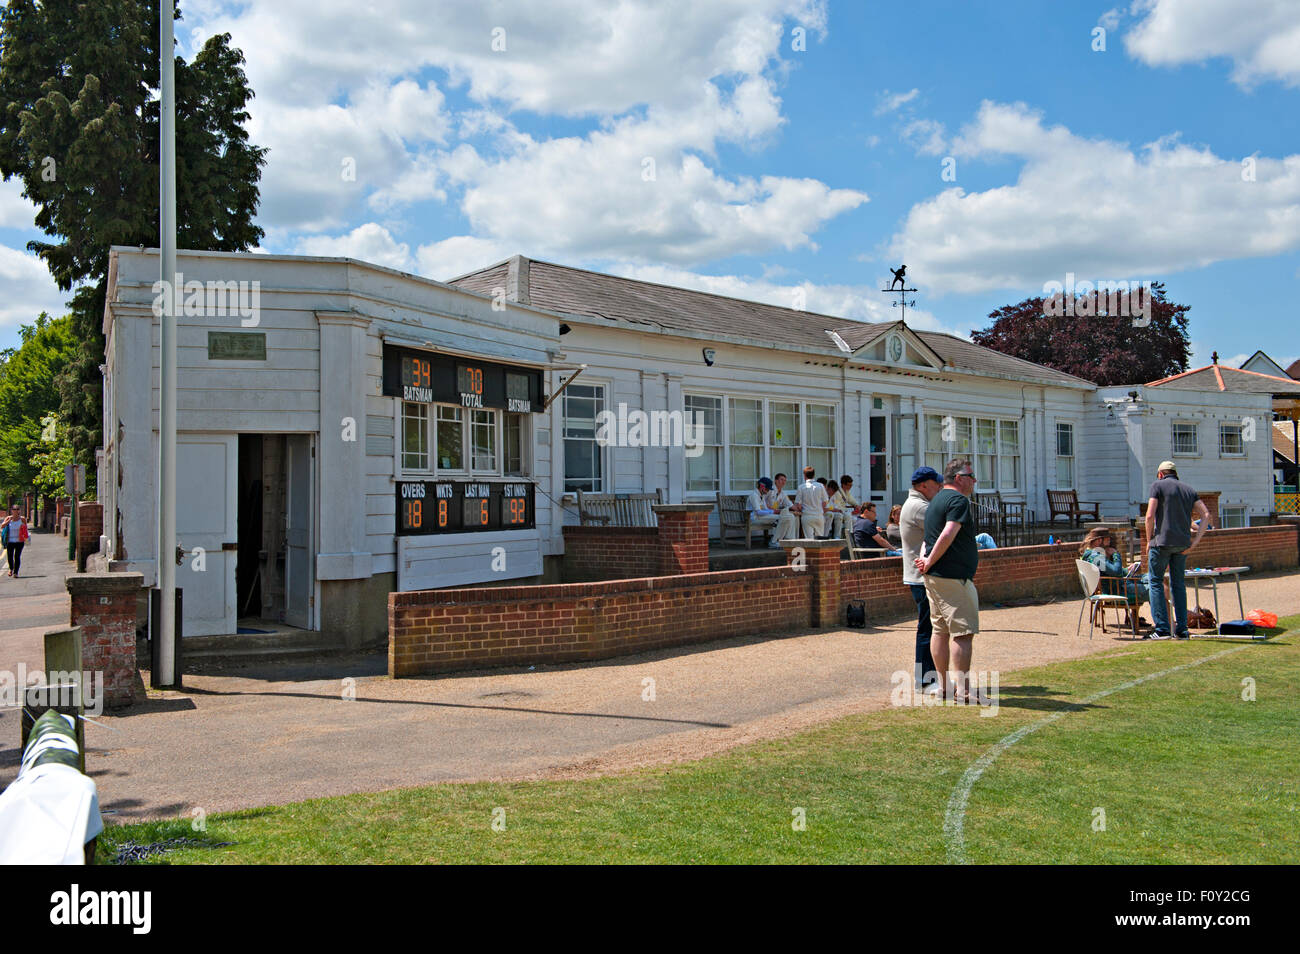 The pavilion at the famous Vine cricket ground in Sevenoaks, Kent, UK Stock Photo